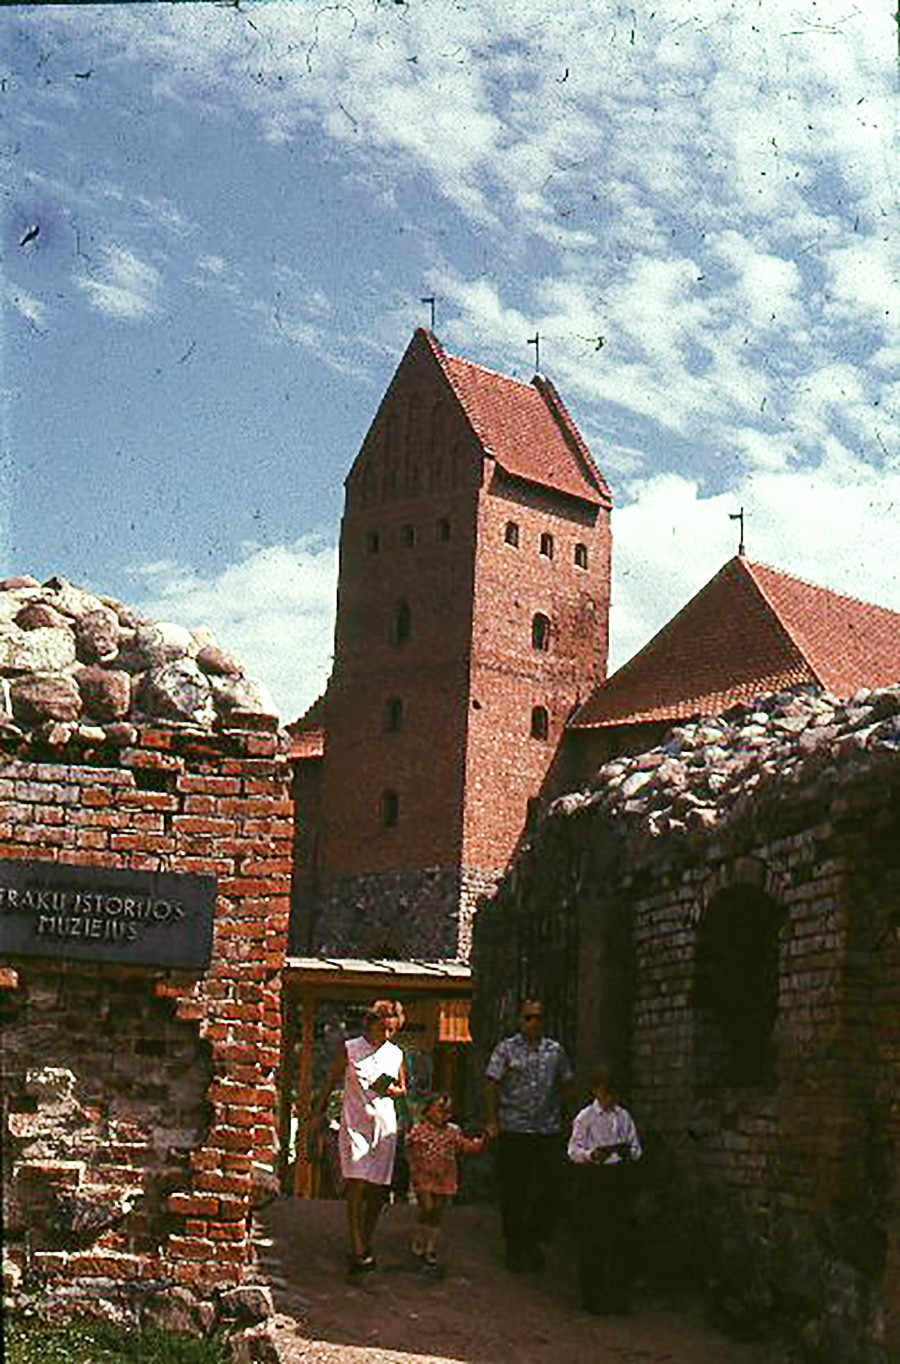 Trakai Island Castle, 1960s.